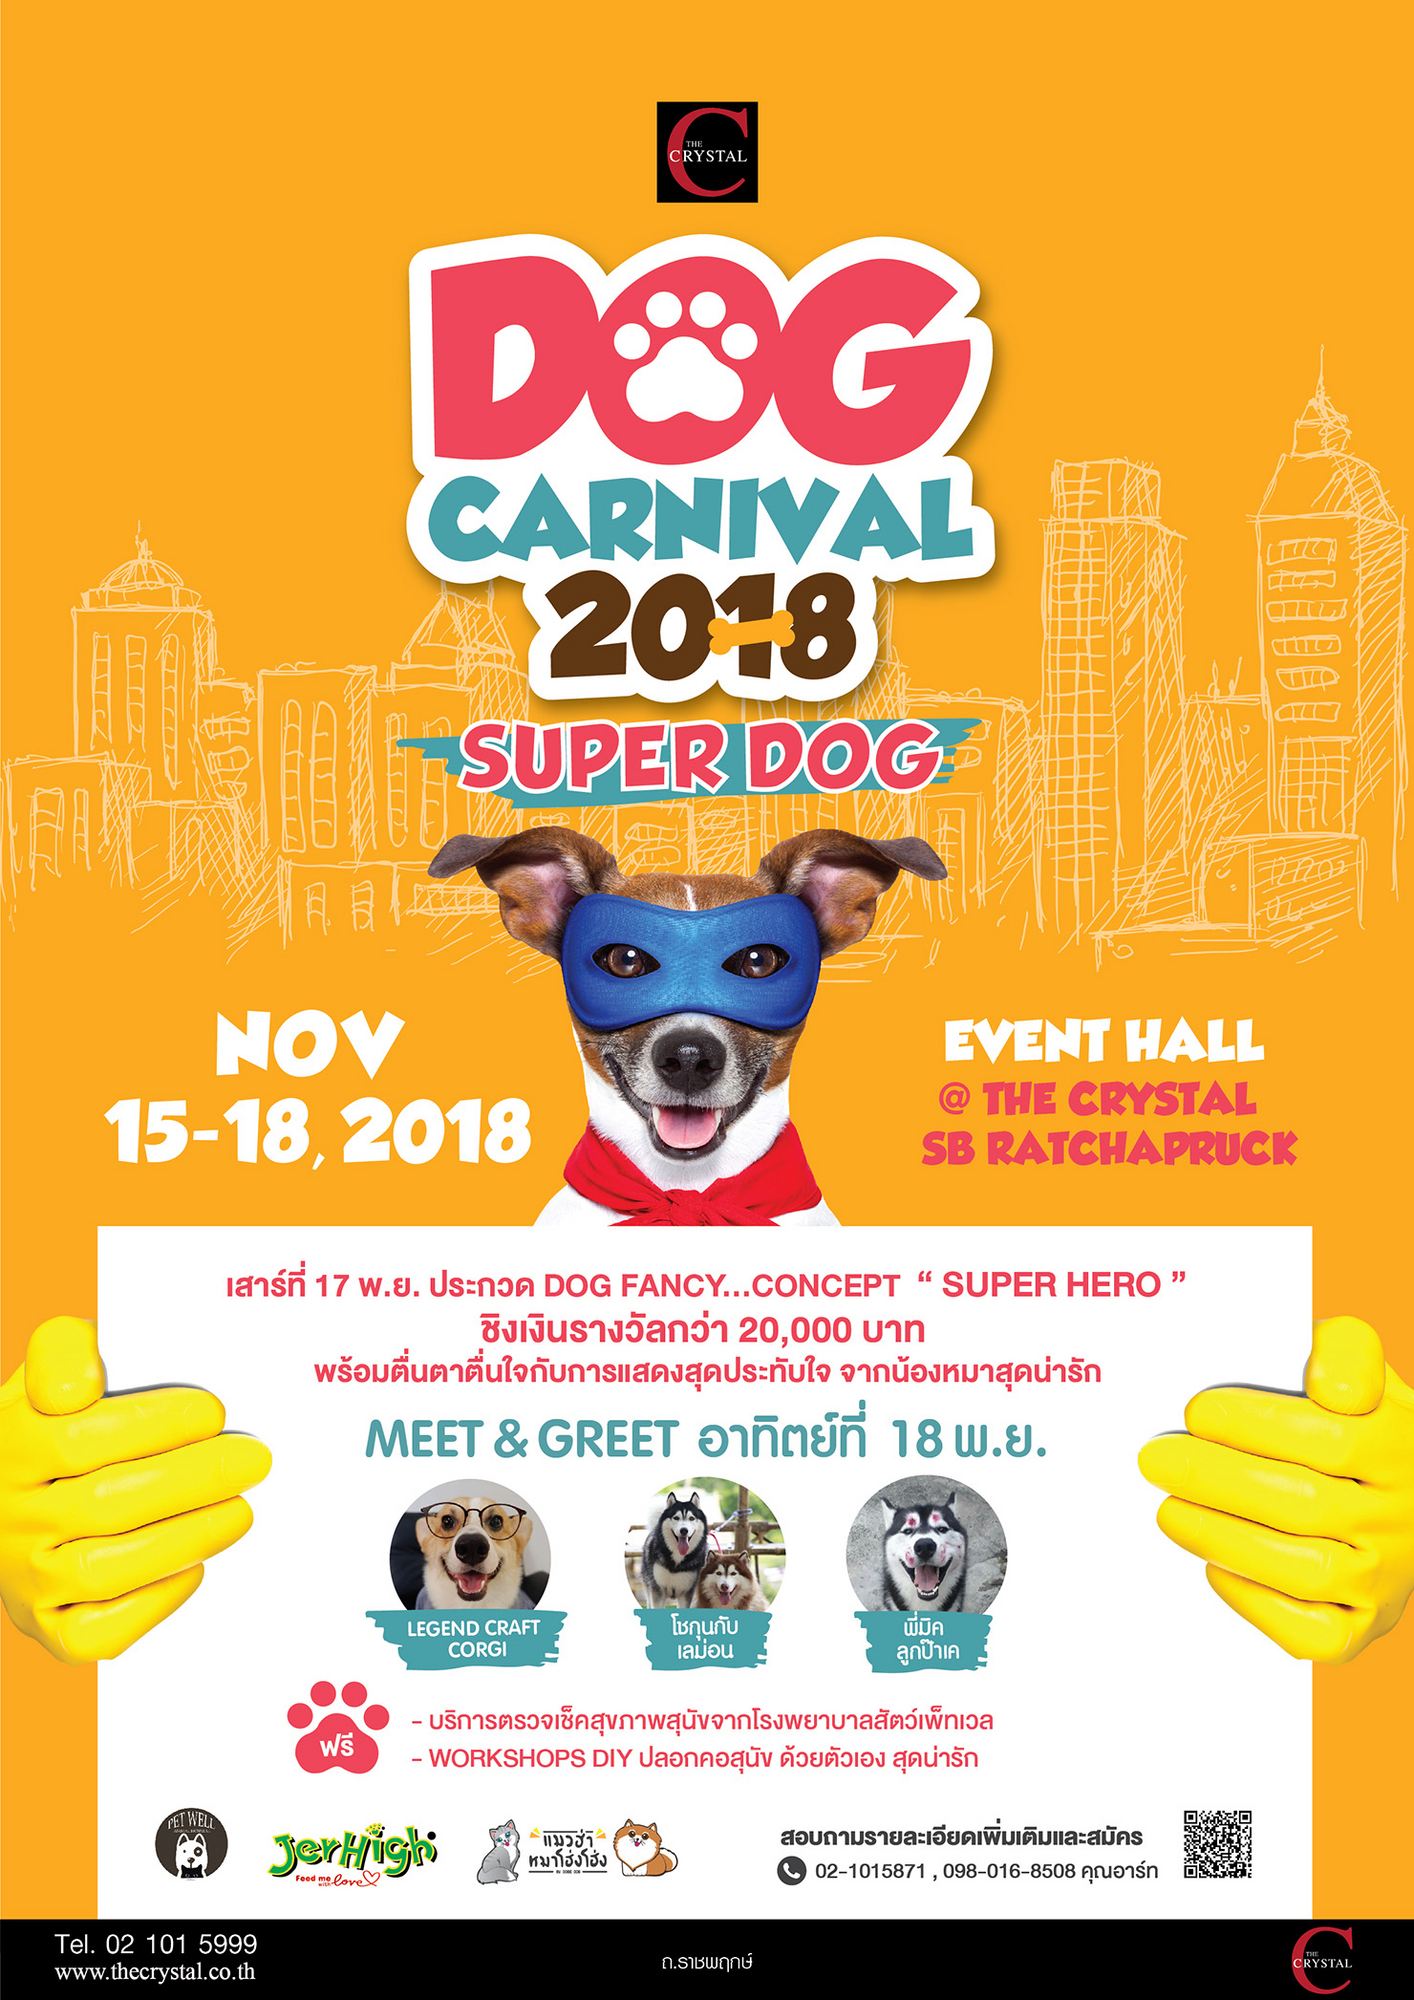 Dog Carnival 2018 ตอน Super Dog ฮีโร่ 4 ขา